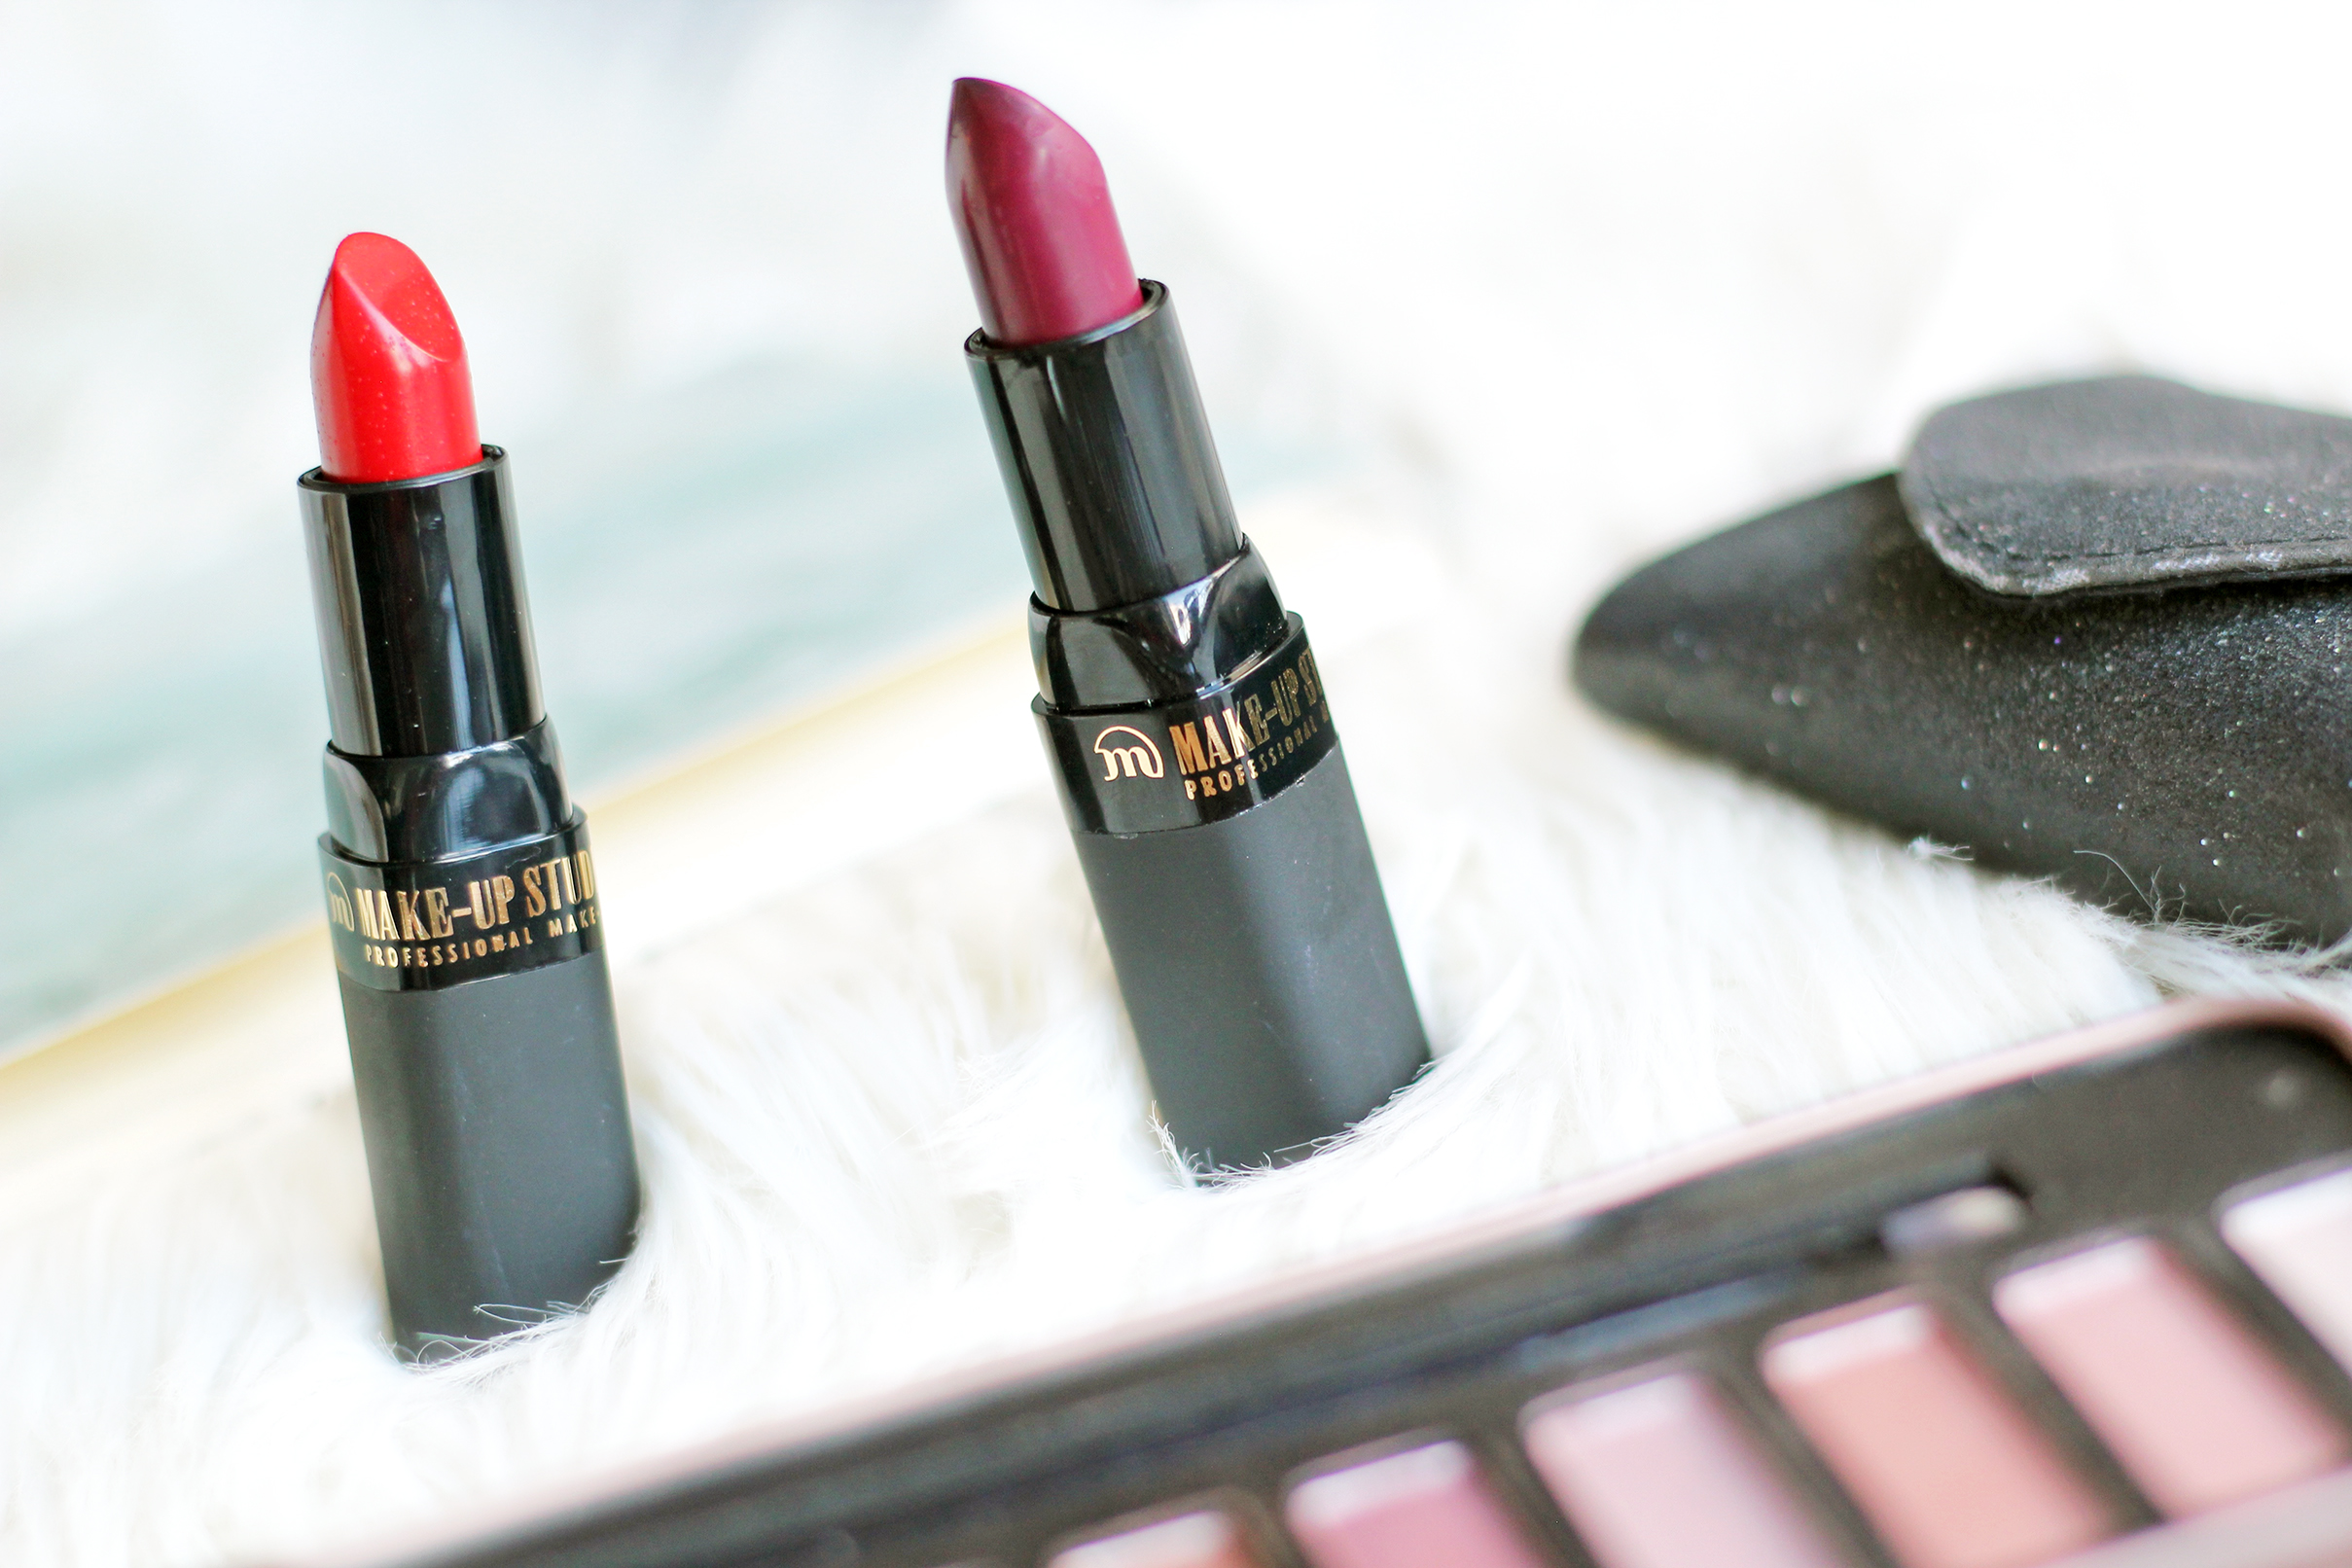 make-up studio lipsticks review a beauty day